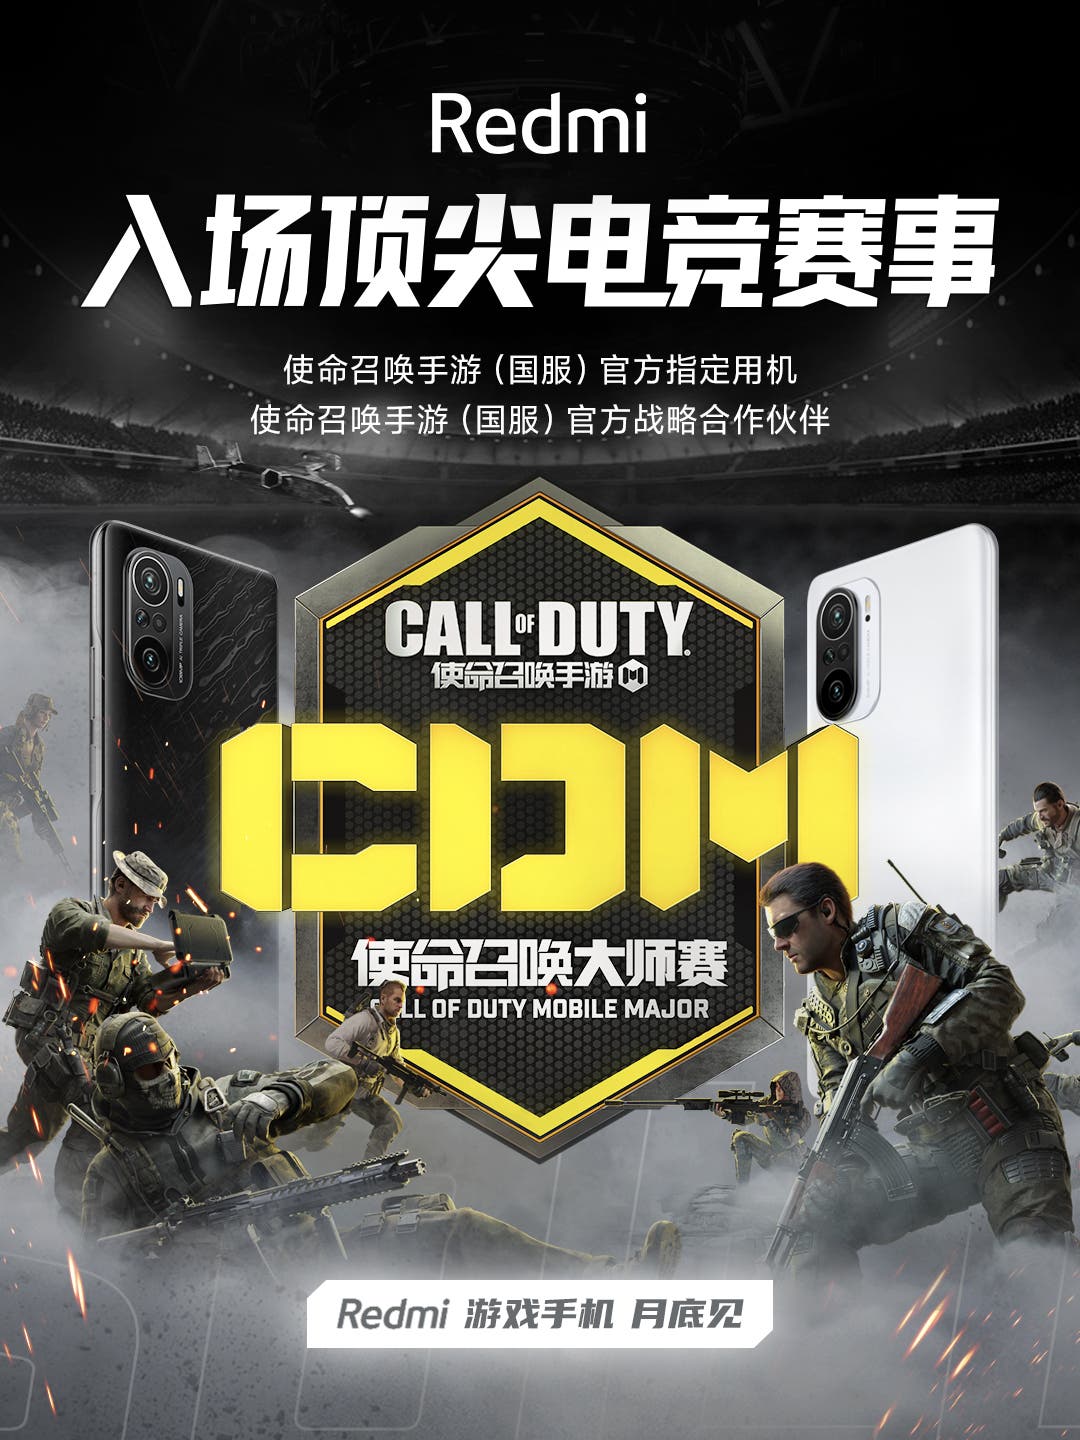 Redmi - Call of Duty: Mobile